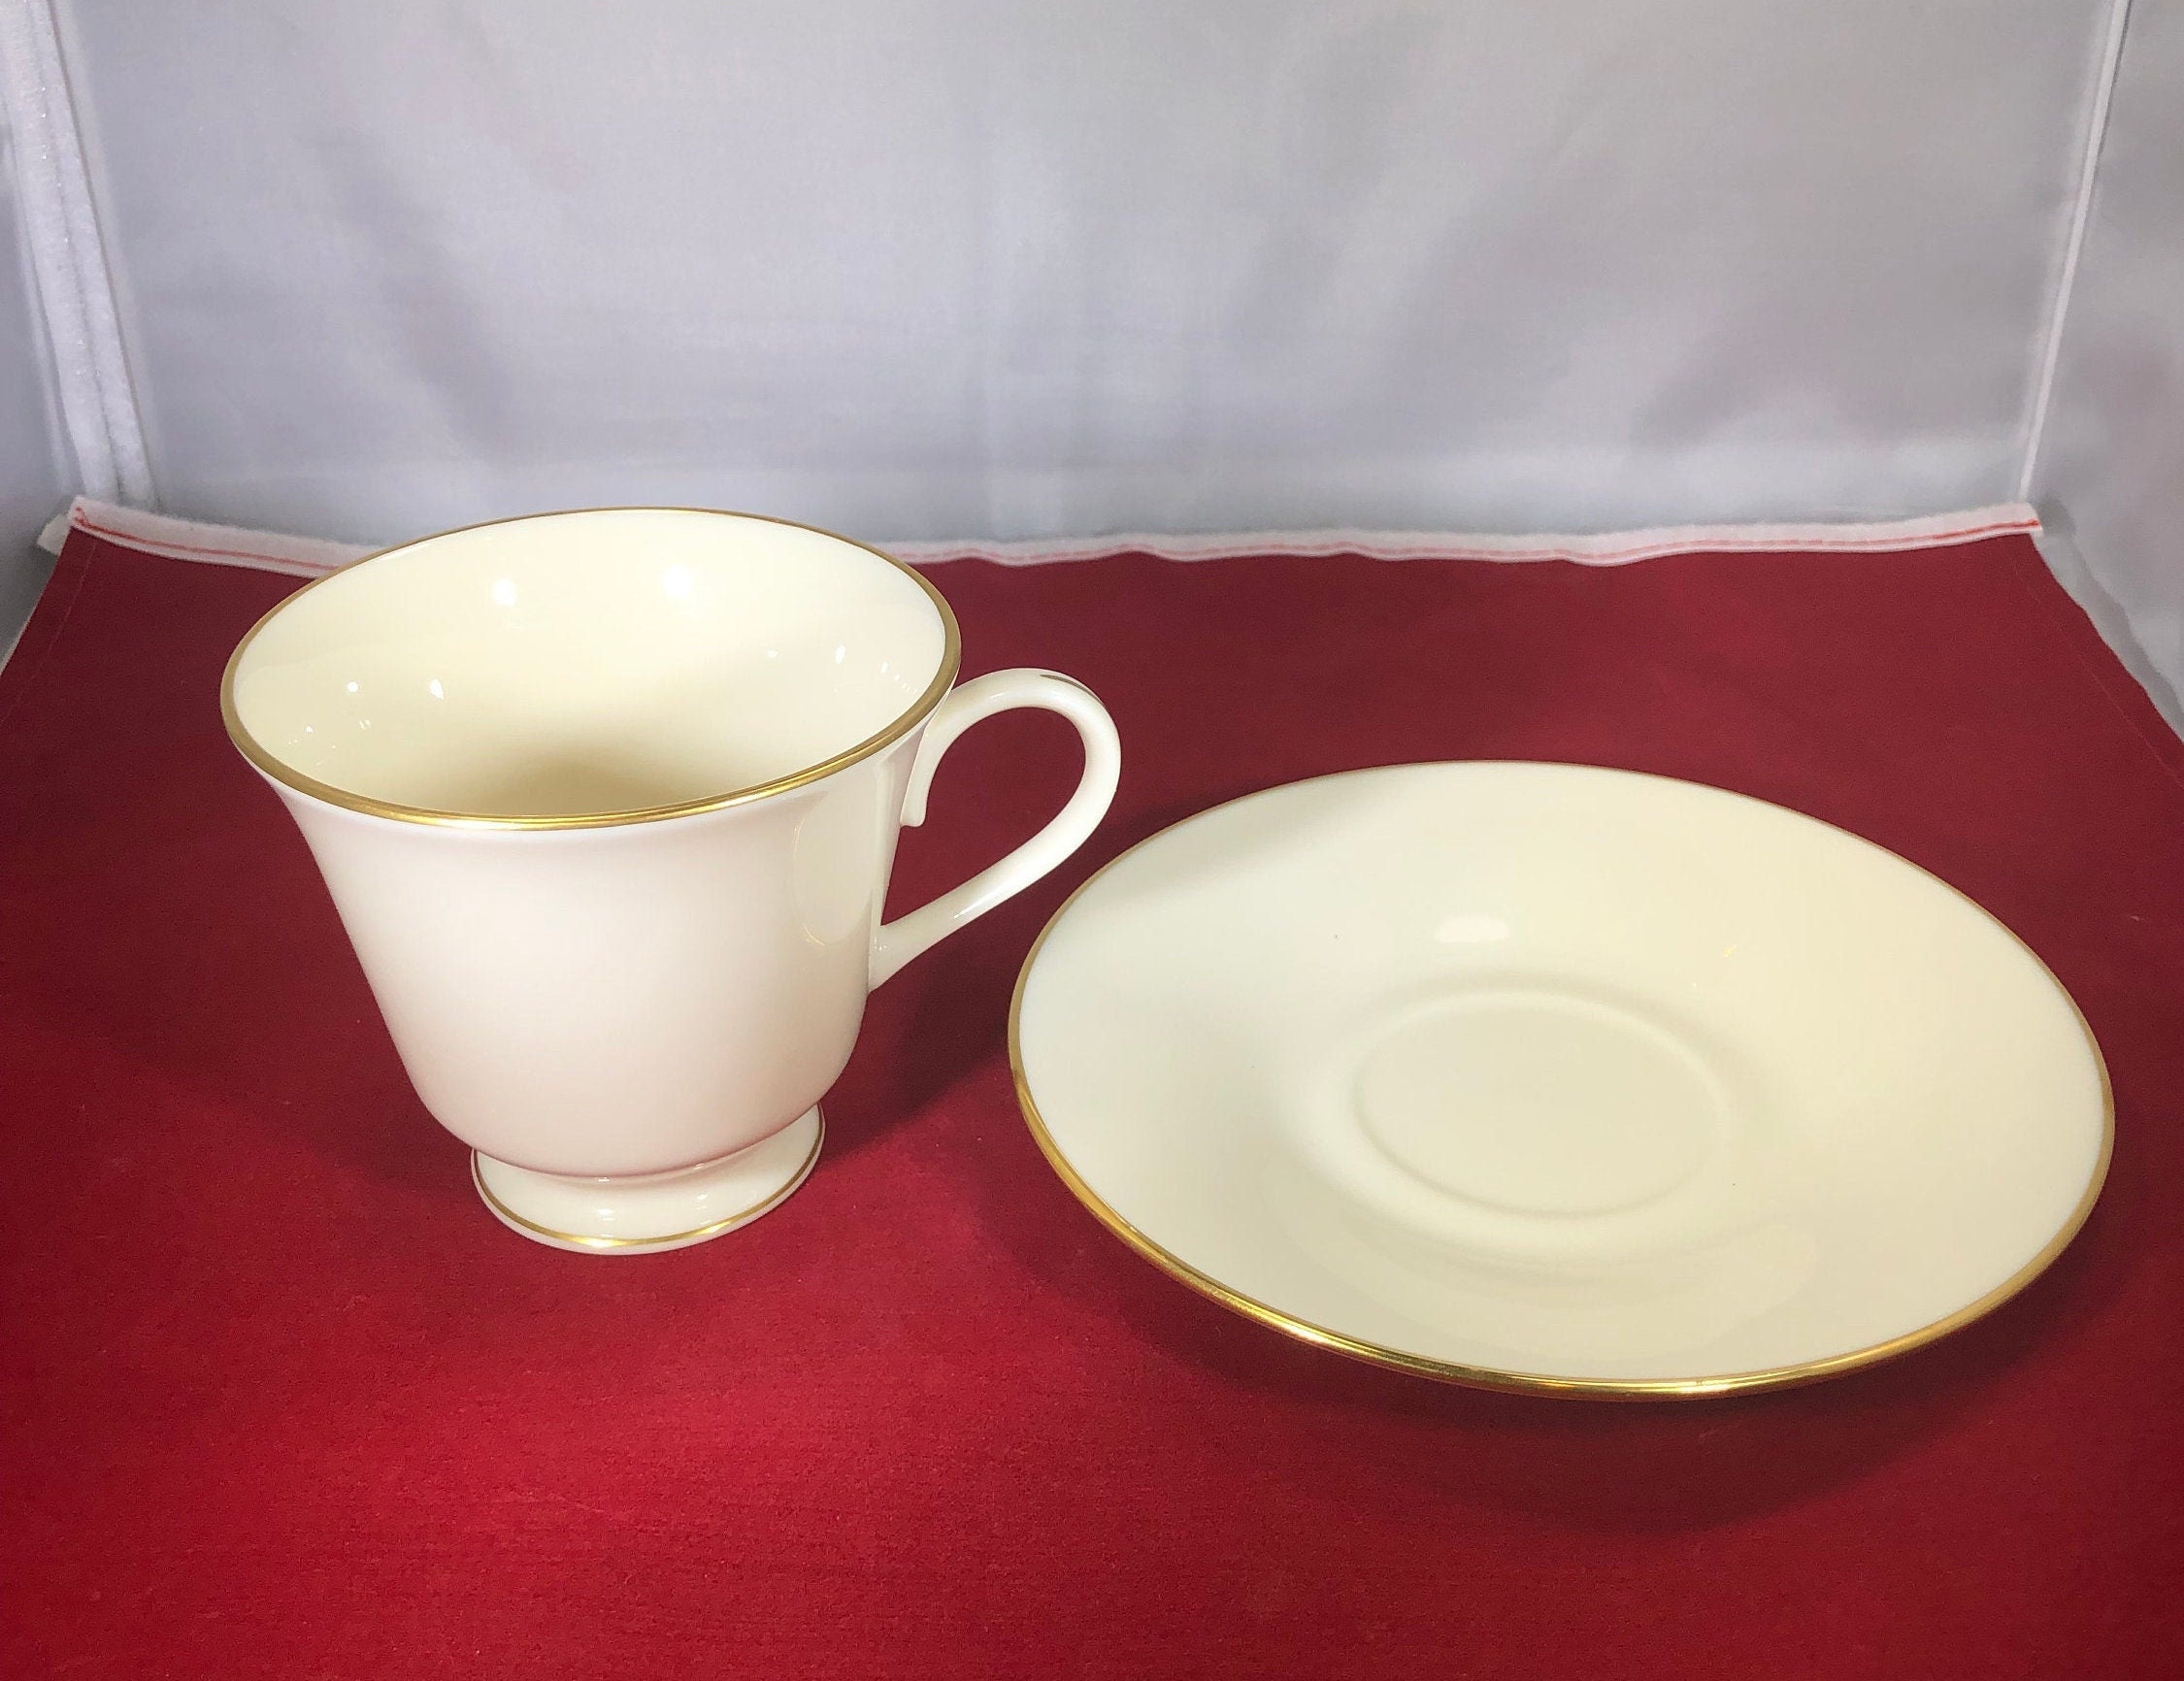 Gold-Teacups-Serving Ware-Dishware Vintage-Lenox-Cups-Saucers-Cosmopolitan-White